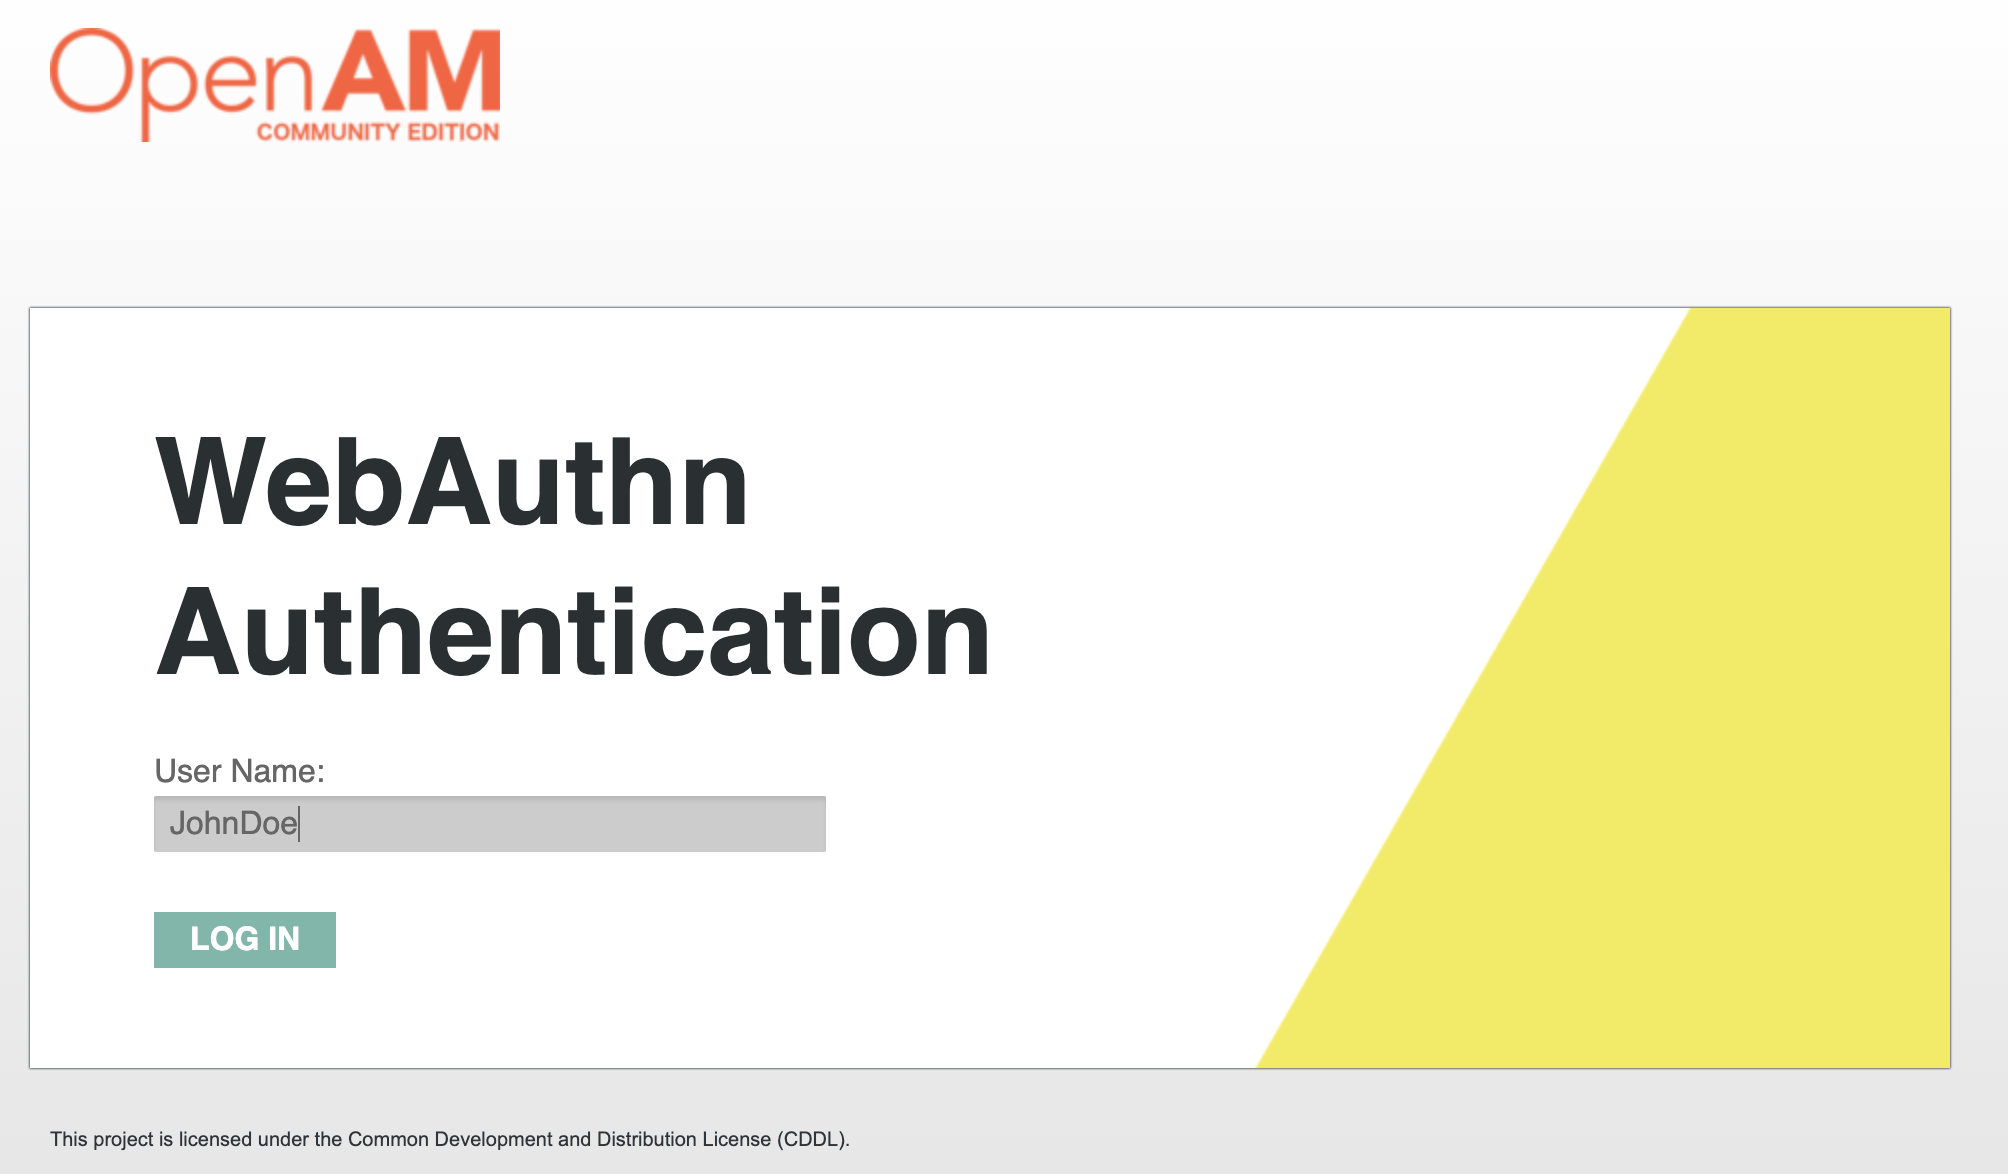 OpenAM  WebAuthn Authentication User Name